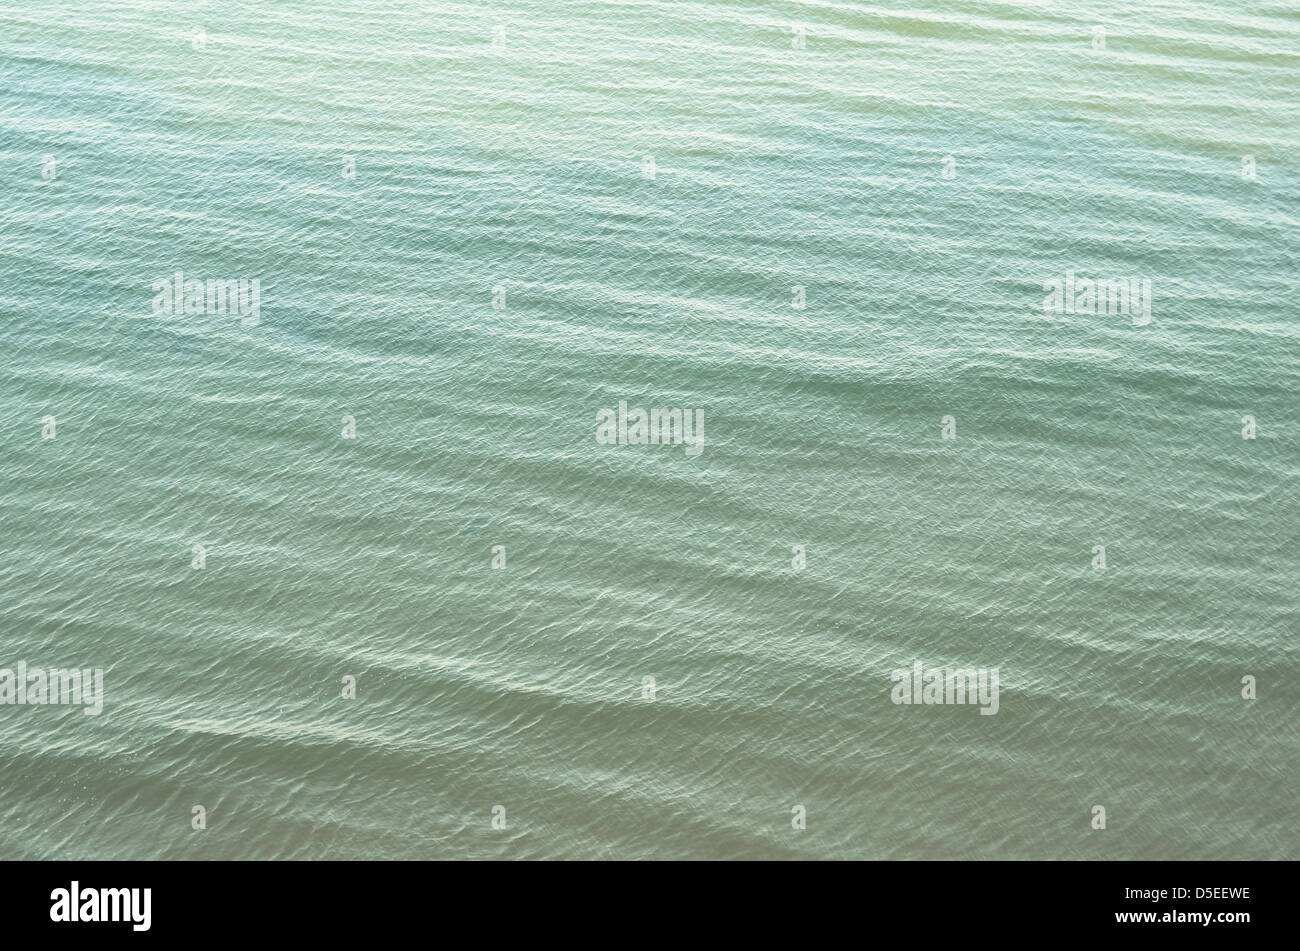 A landscape photograph showing a calm sea. Stock Photo